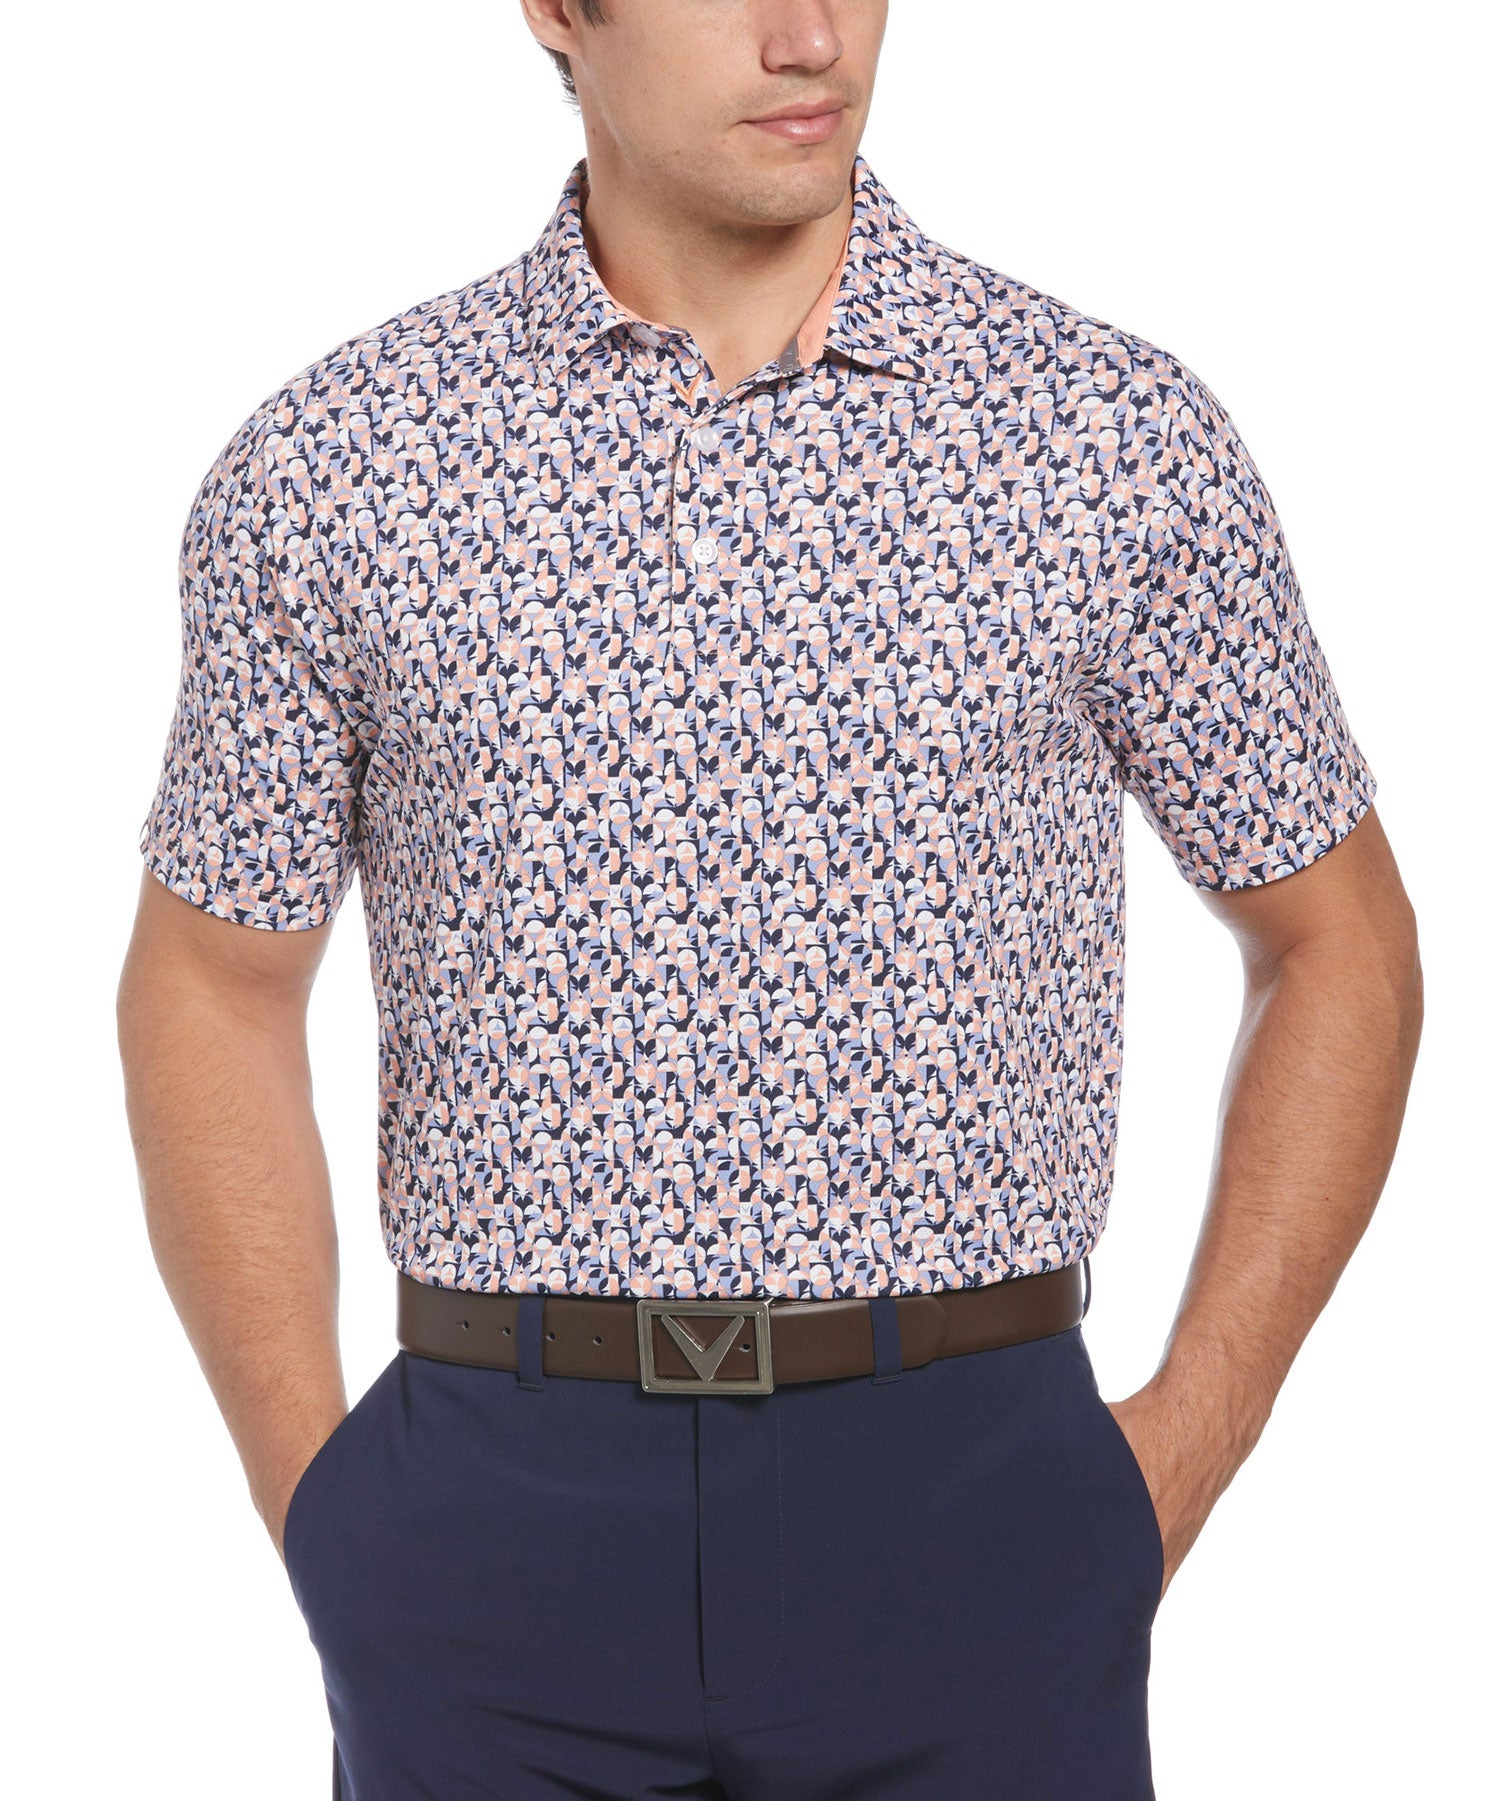 Callaway Short Sleeve Abstract Print Polo Knit Shirt, Men's Big & Tall